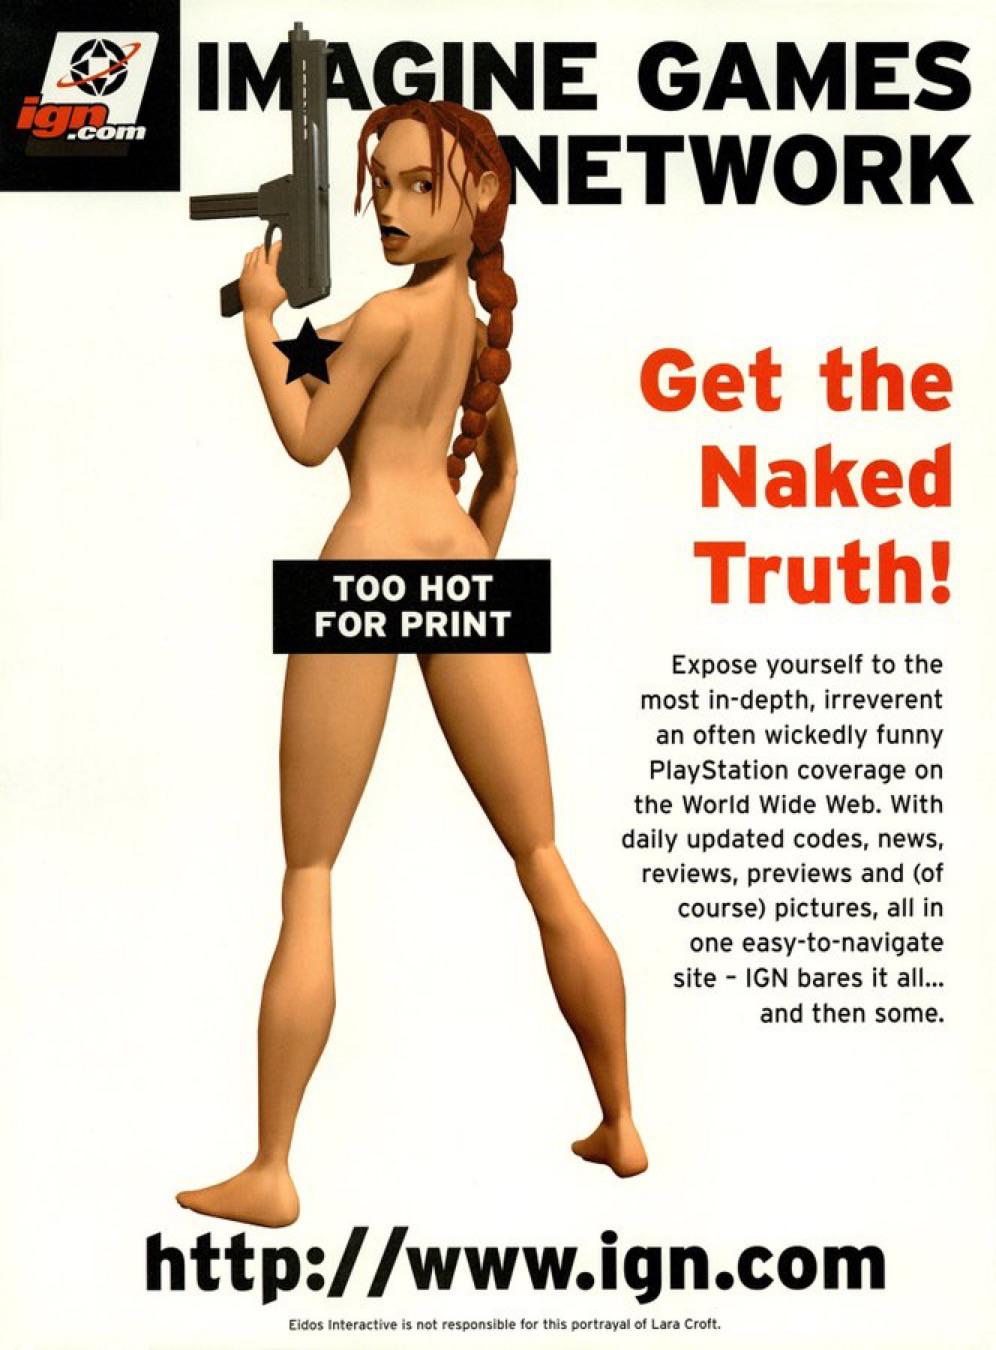 Classic Muscle Porn Magazines - Tomb Raider Porn - Magazine Scan, Pale Skin, Ign, Ass, Nude, Lara Croft ( classic) - Valorant Porn Gallery